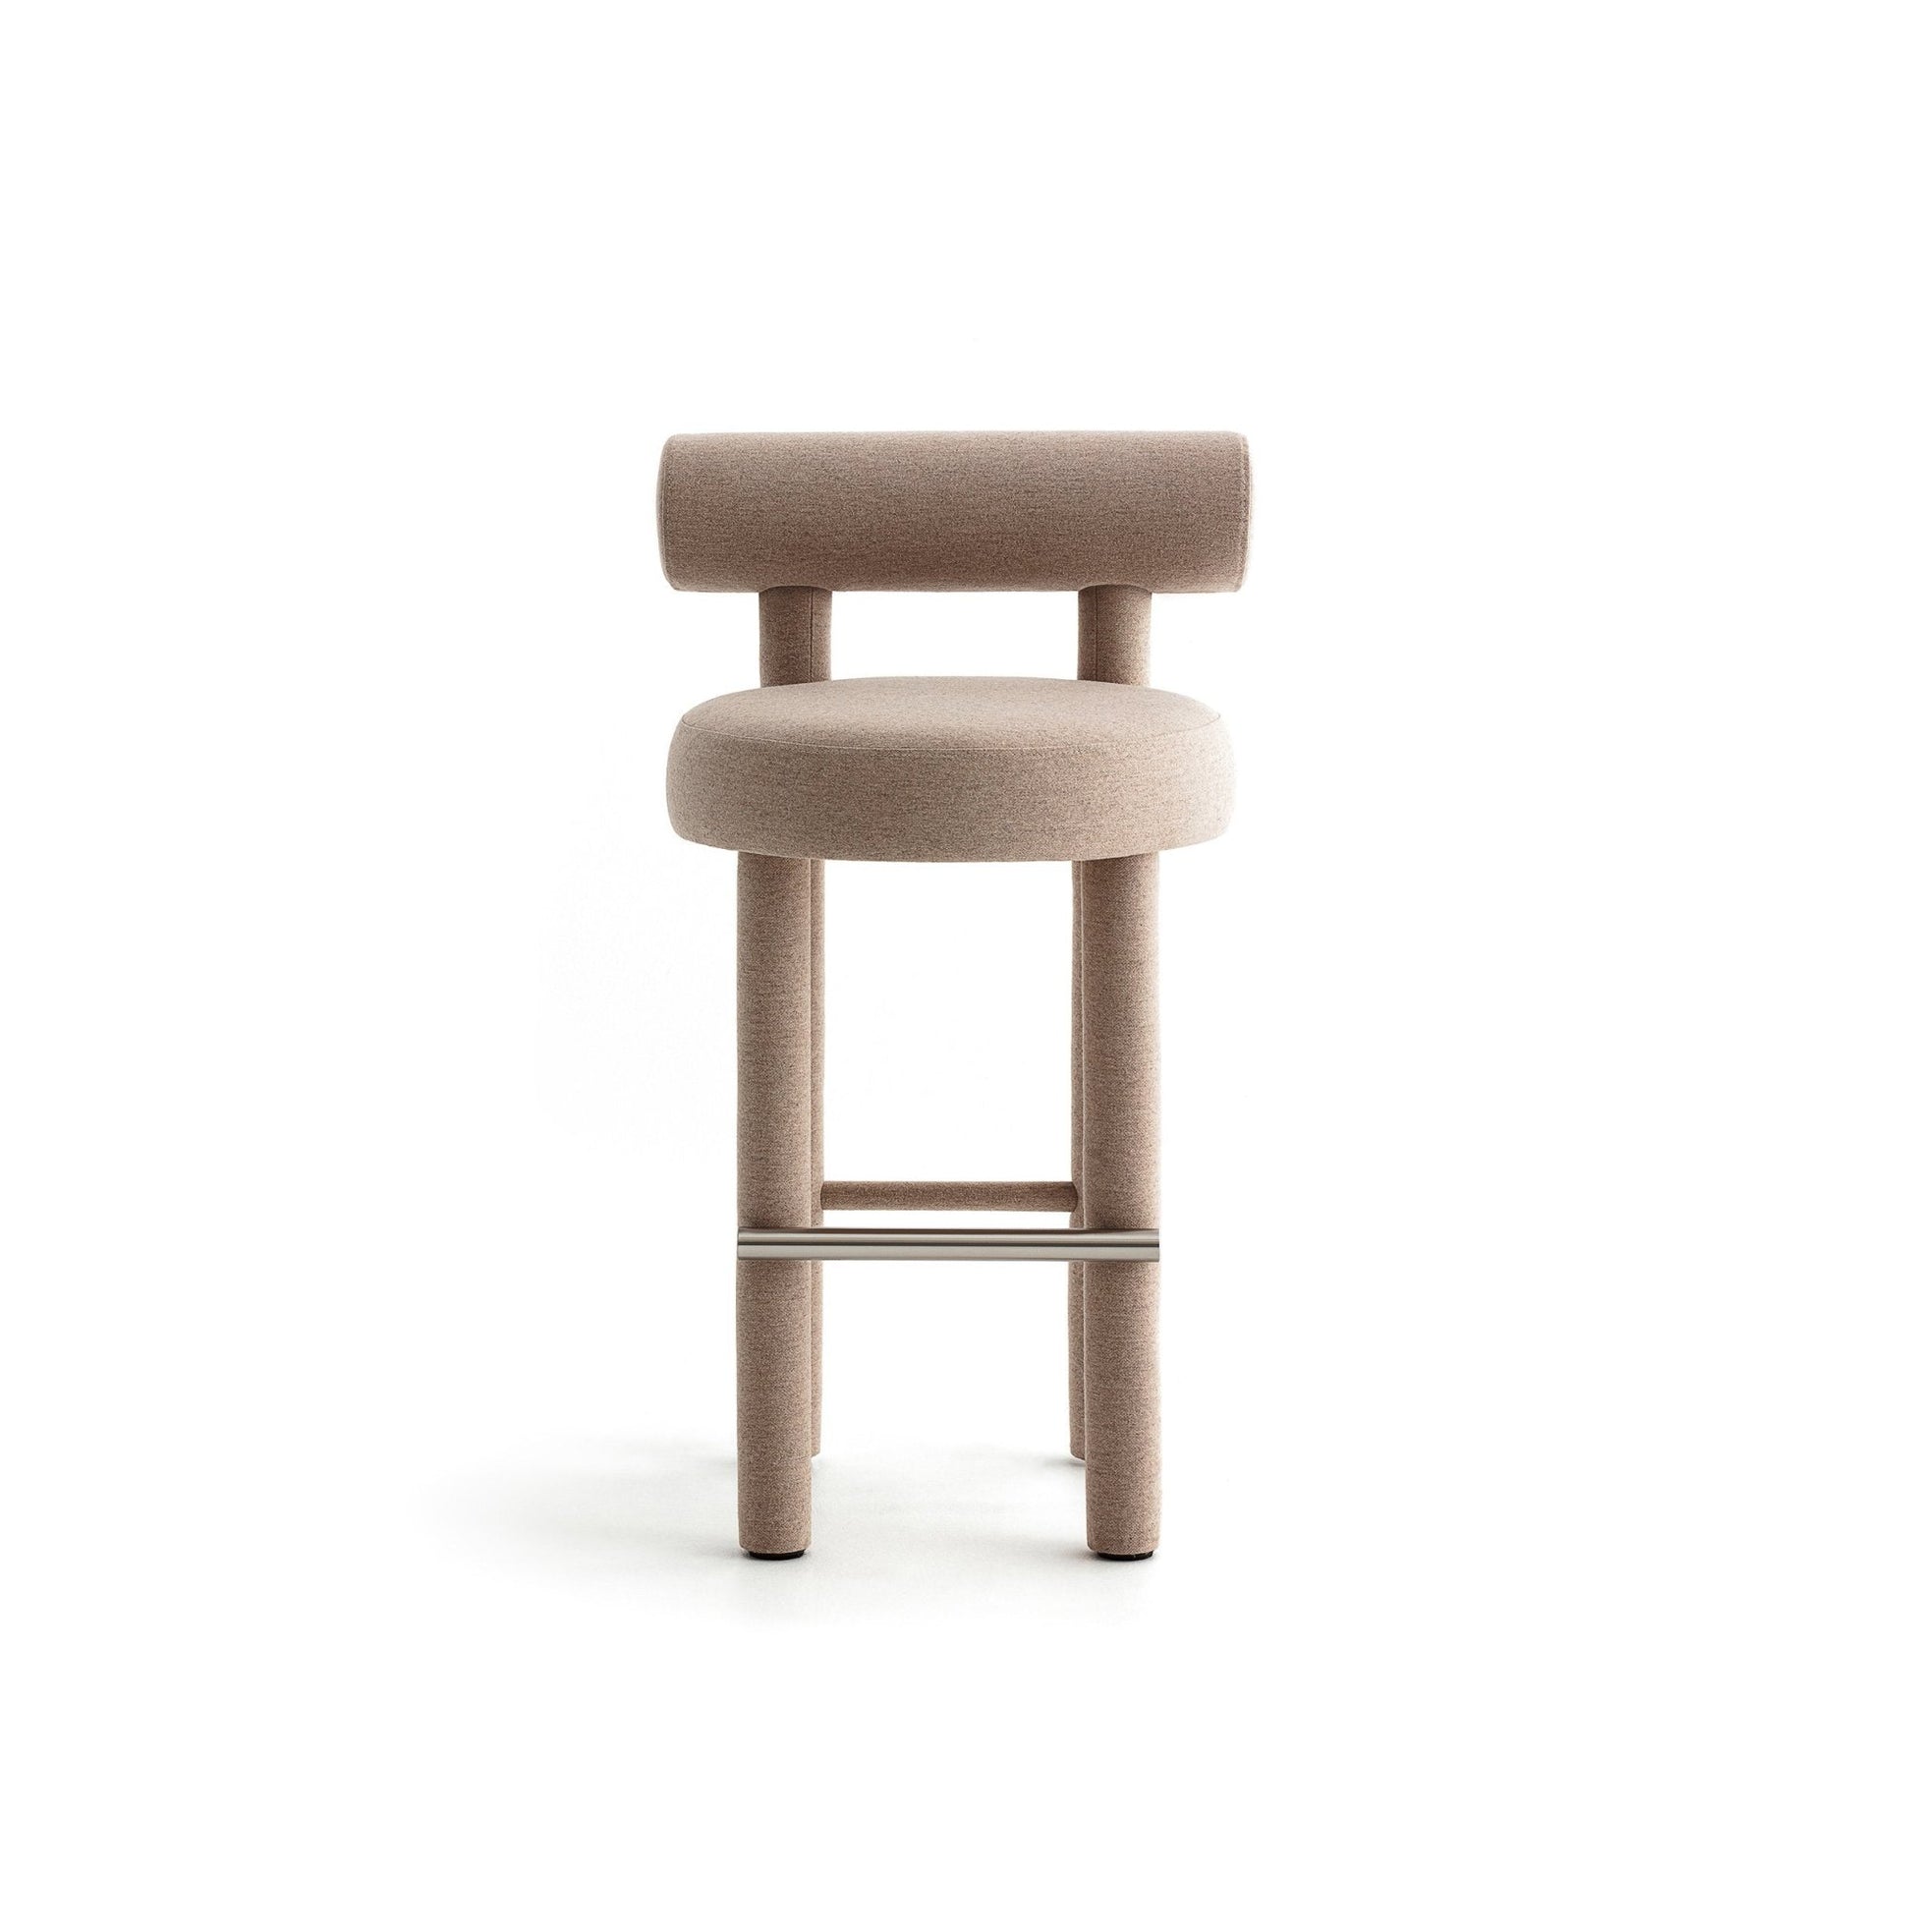 Bar Chair with backrest GROPIUS CS1 - UKRAINIAN PRODUCT DESIGN